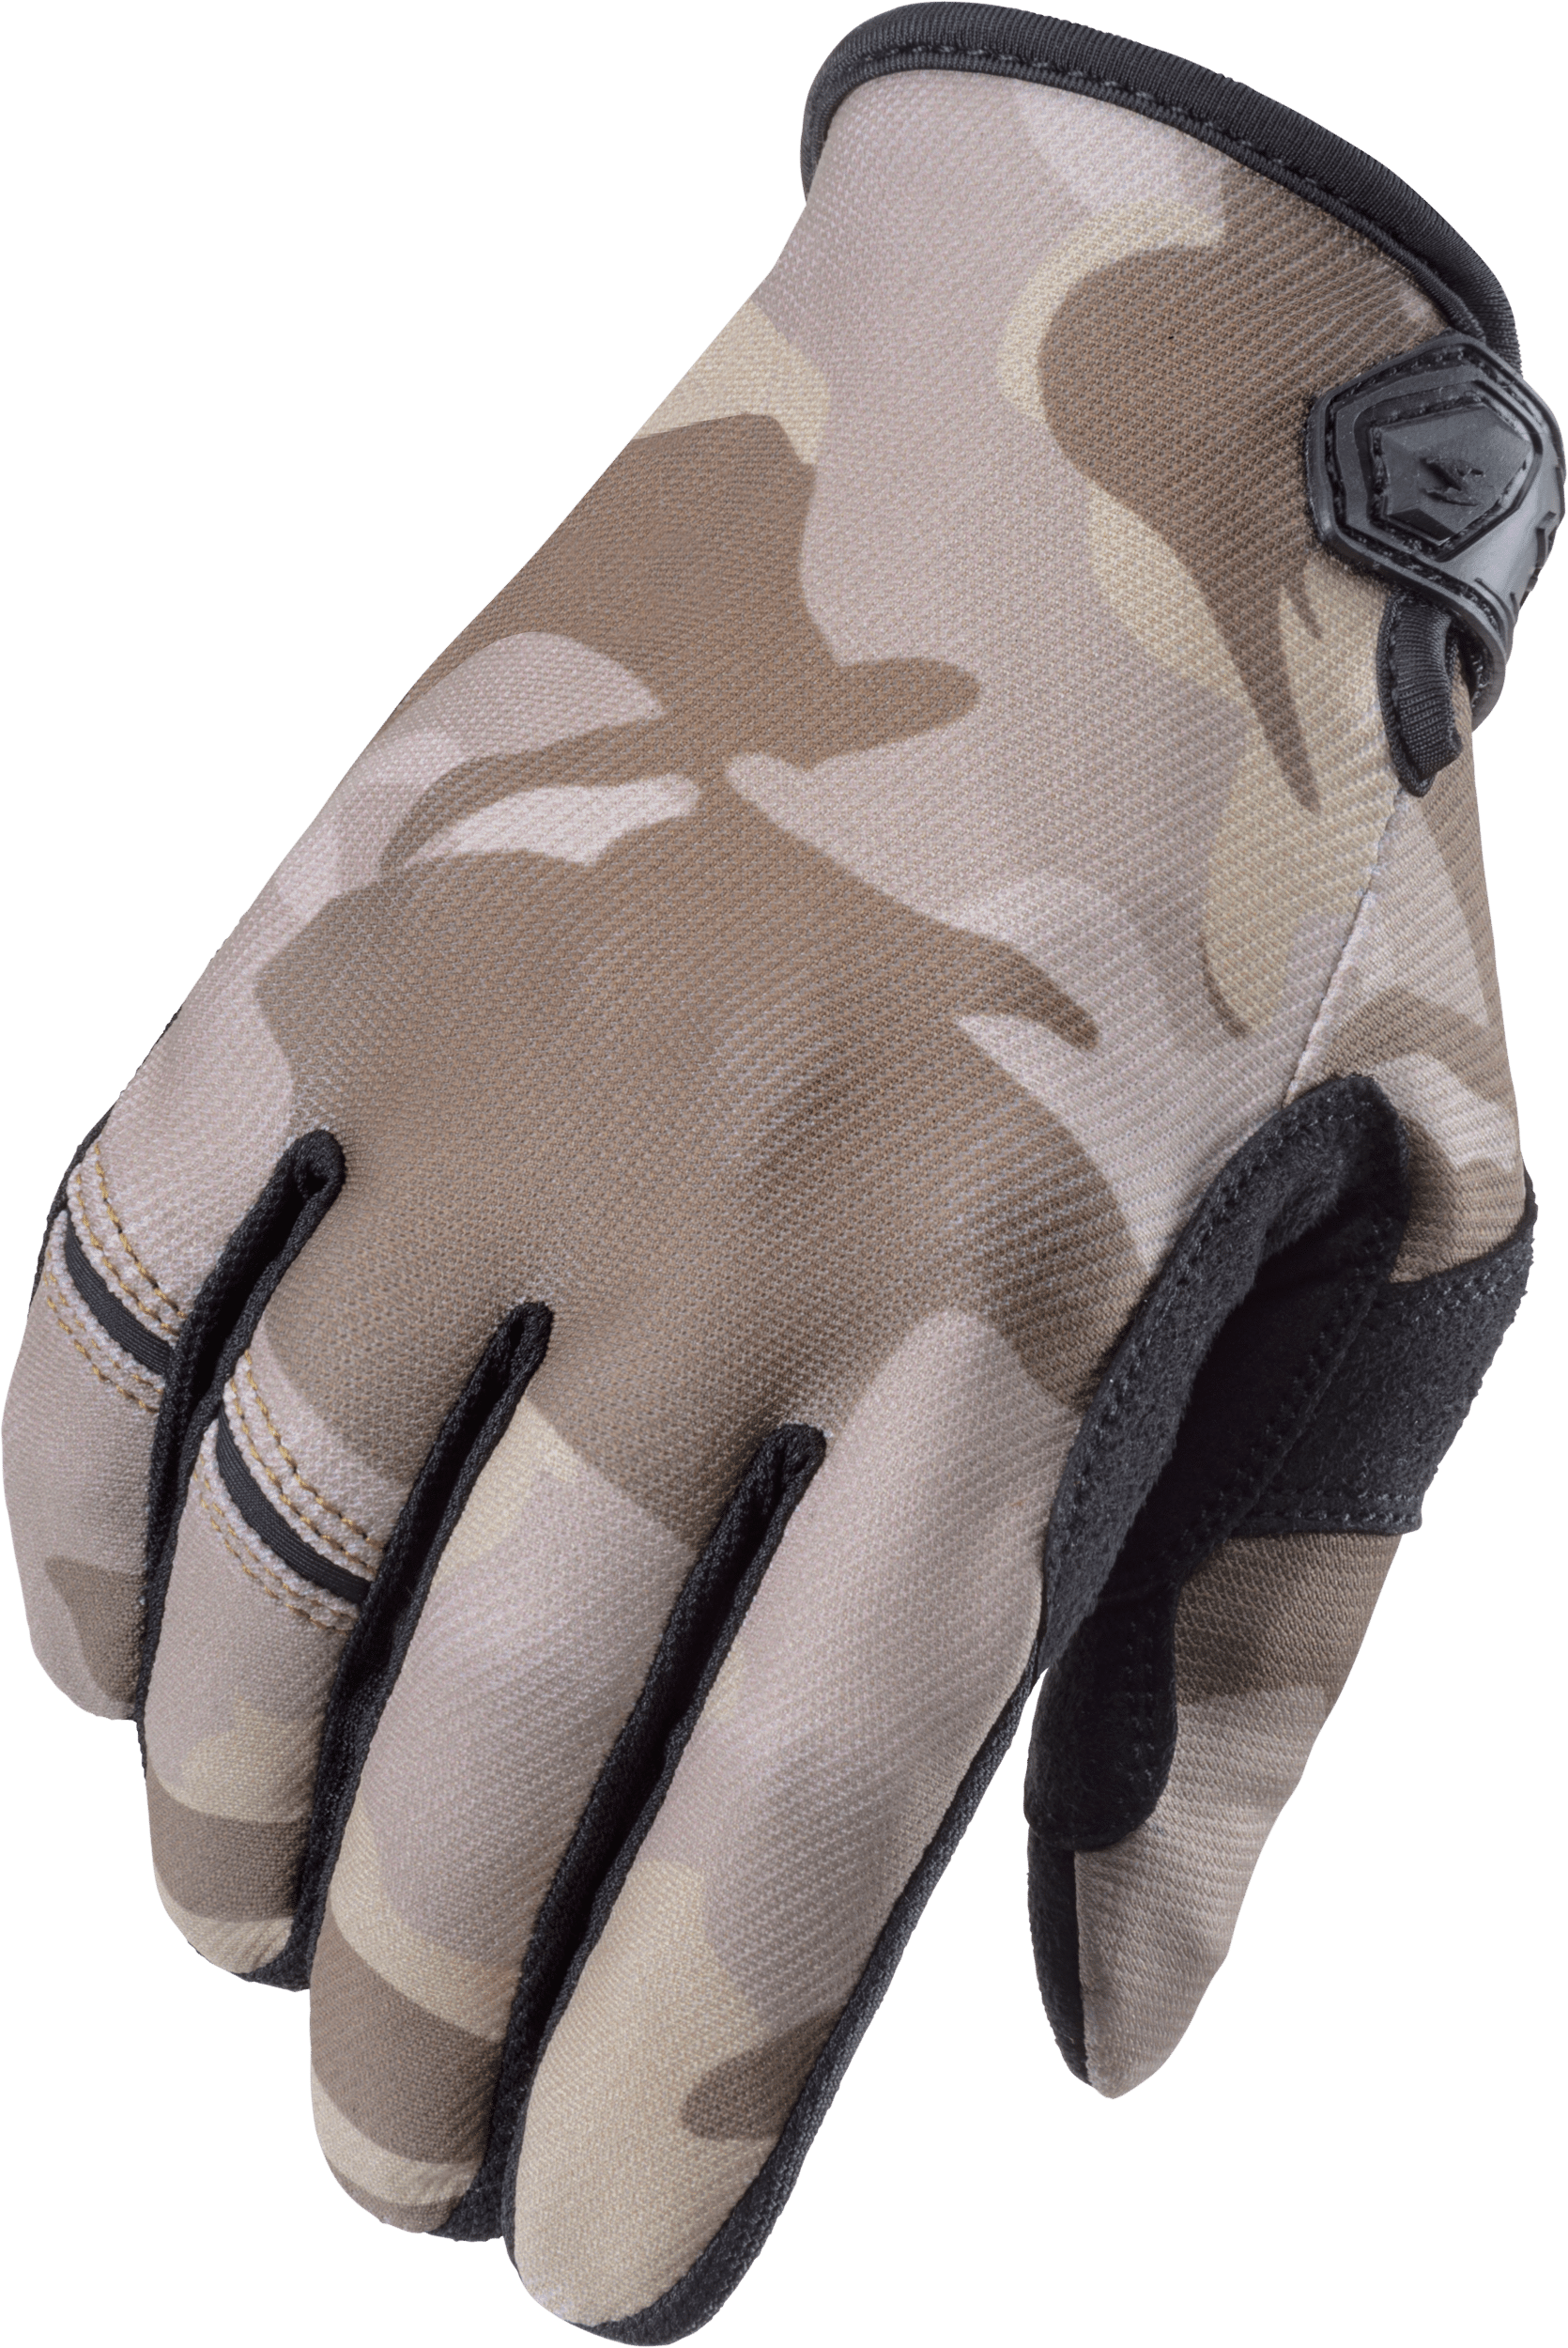 Western Powersports Gloves Desert Storm / 2X-Large Moto-Flex Gloves by Scorpion Exo G70-507